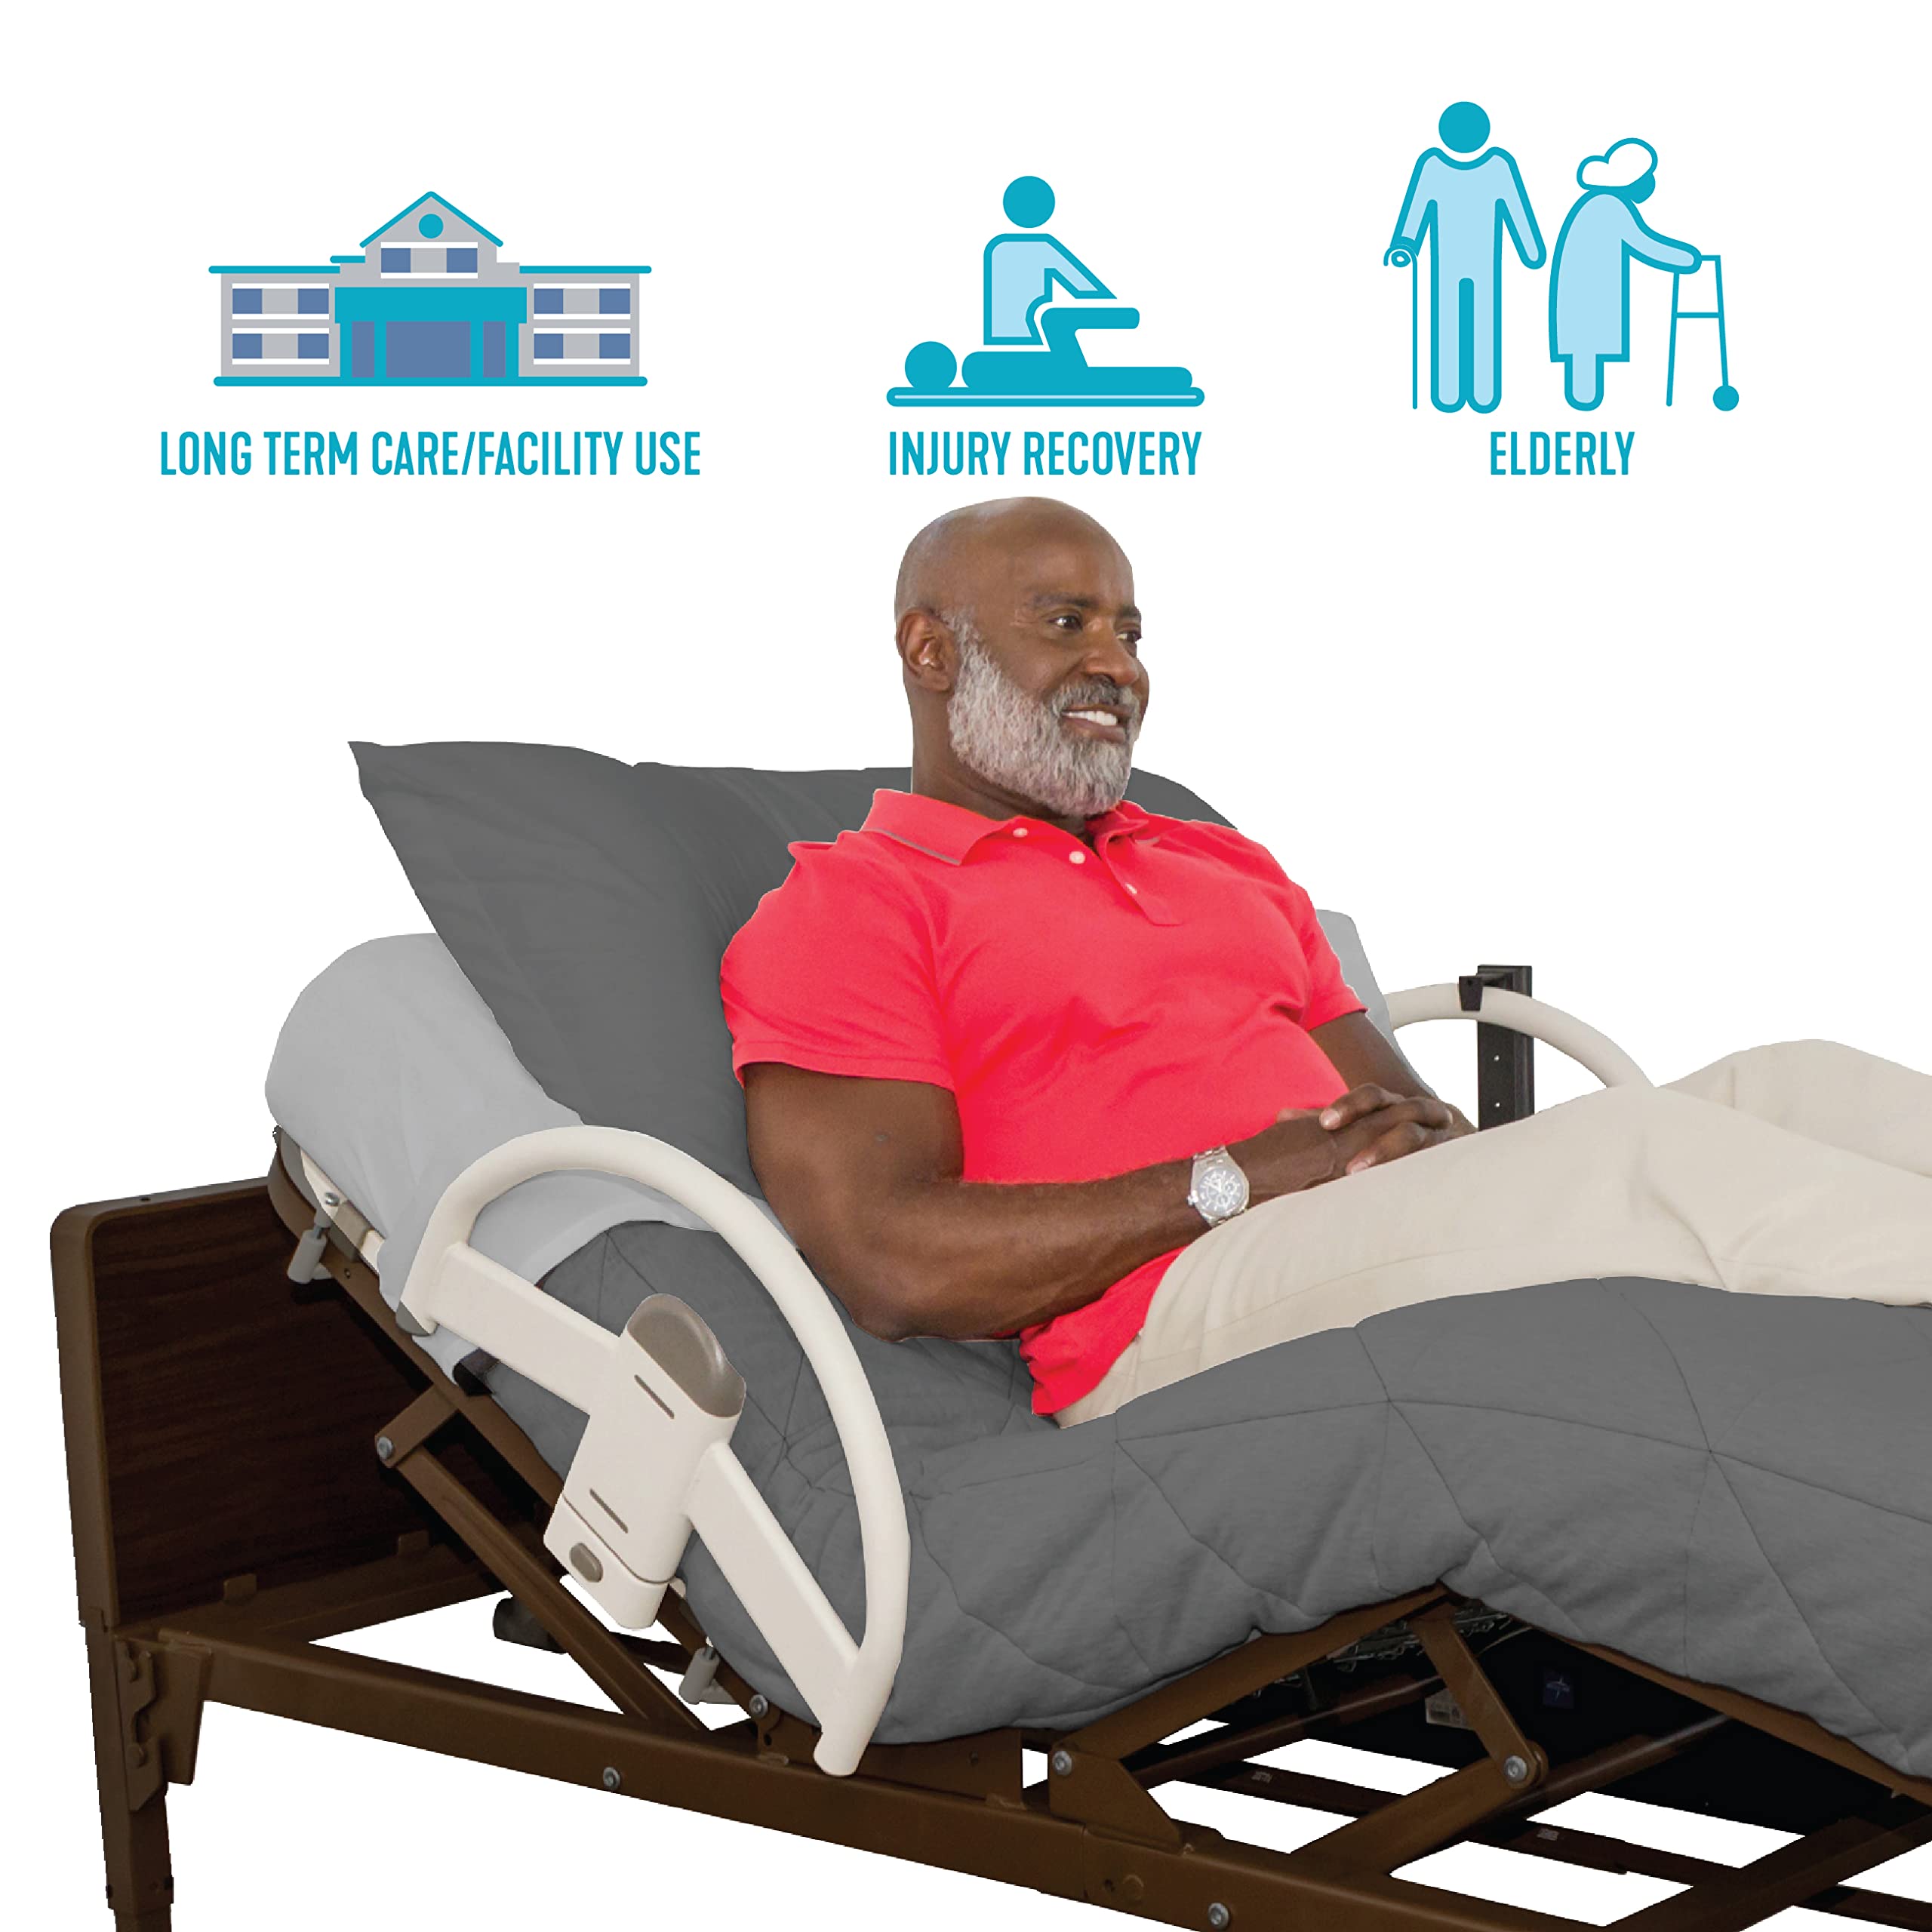 Stander EZ Click Bed Handle, Hospital Bed Rail, Safety Assist Medical Rail for Seniors, Long Term Care for Elderly, Set of 2